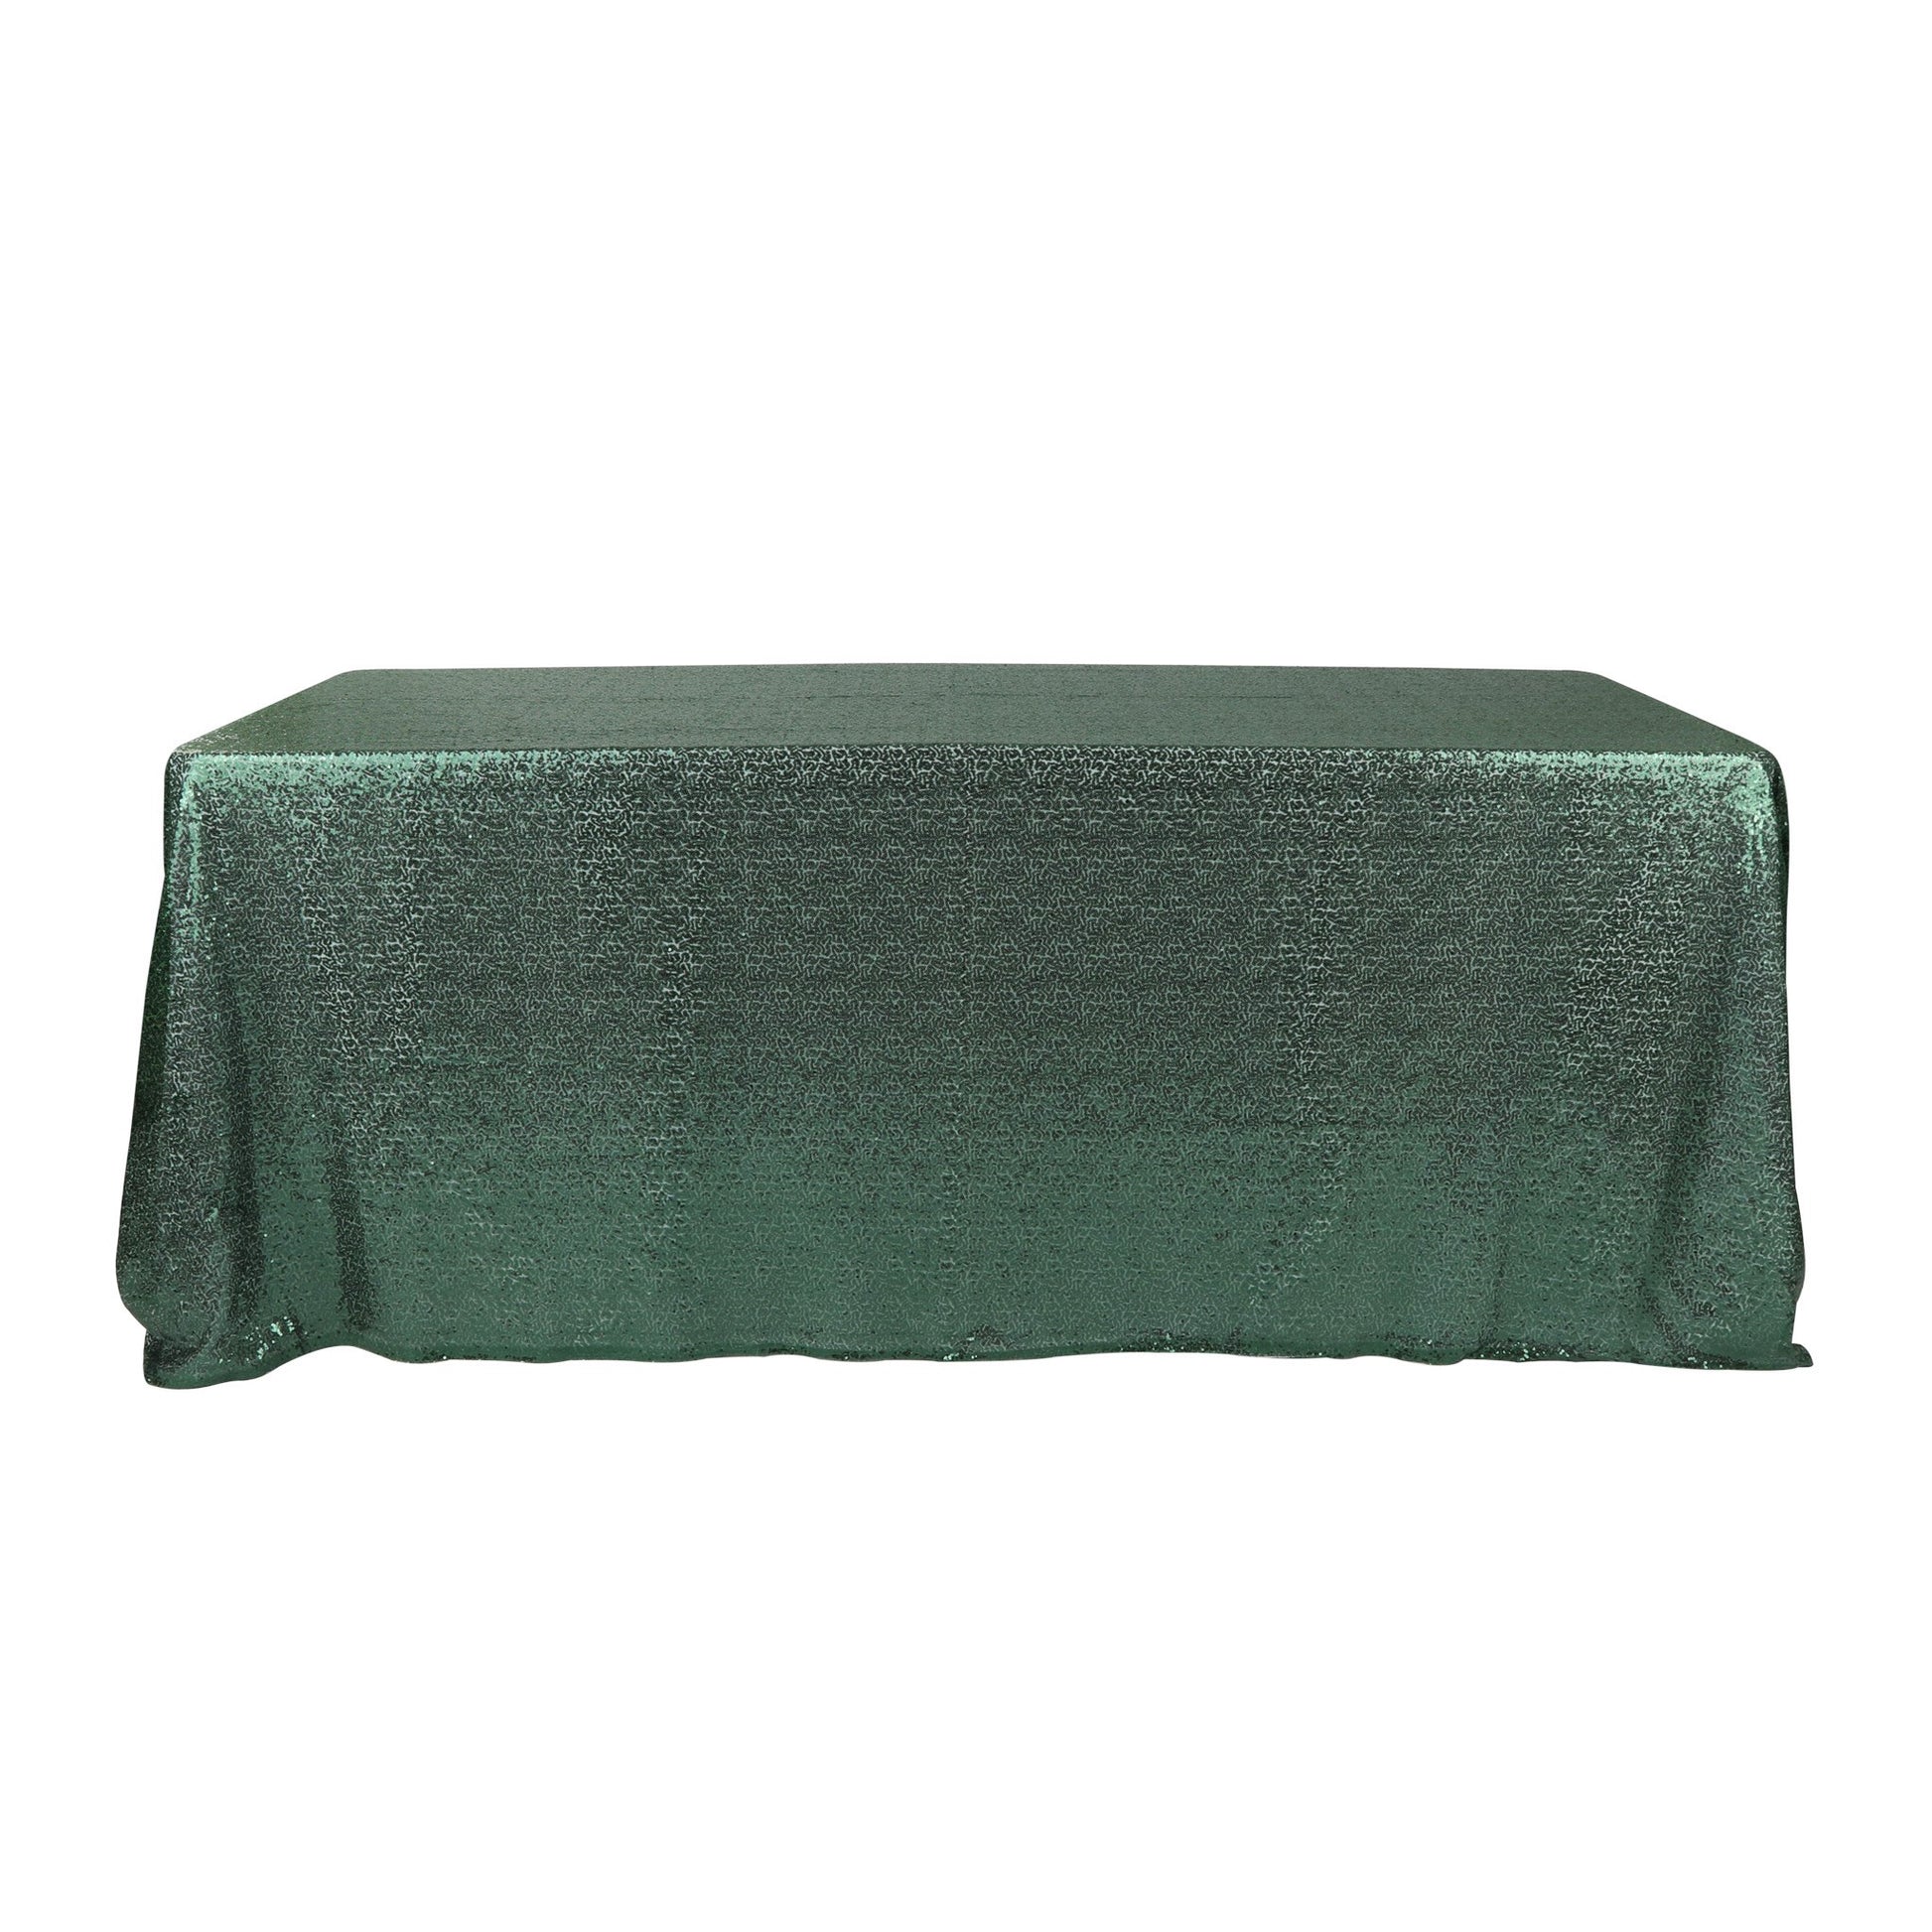 Glitz Sequin Mesh Net Tablecloth 90"x156" Rectangular - Emerald Green